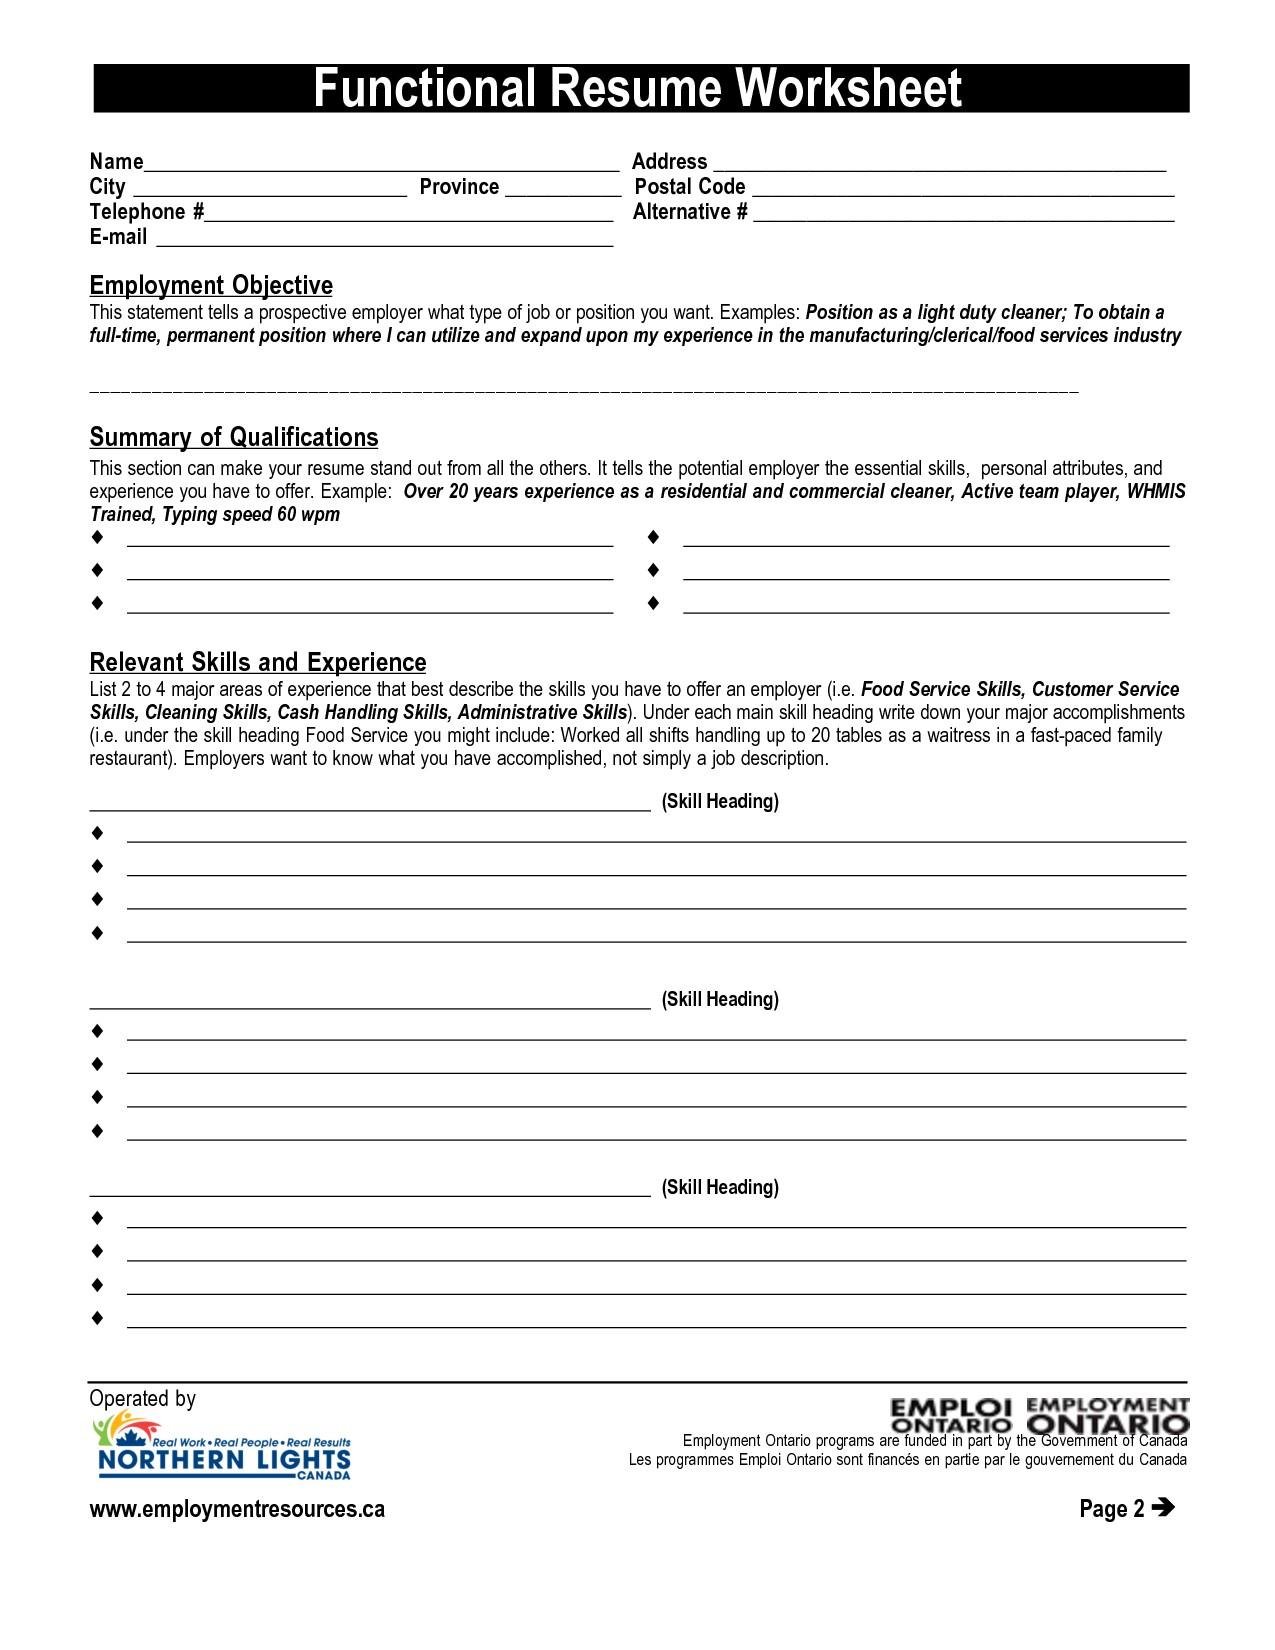 Resume Worksheets For Students Db excel